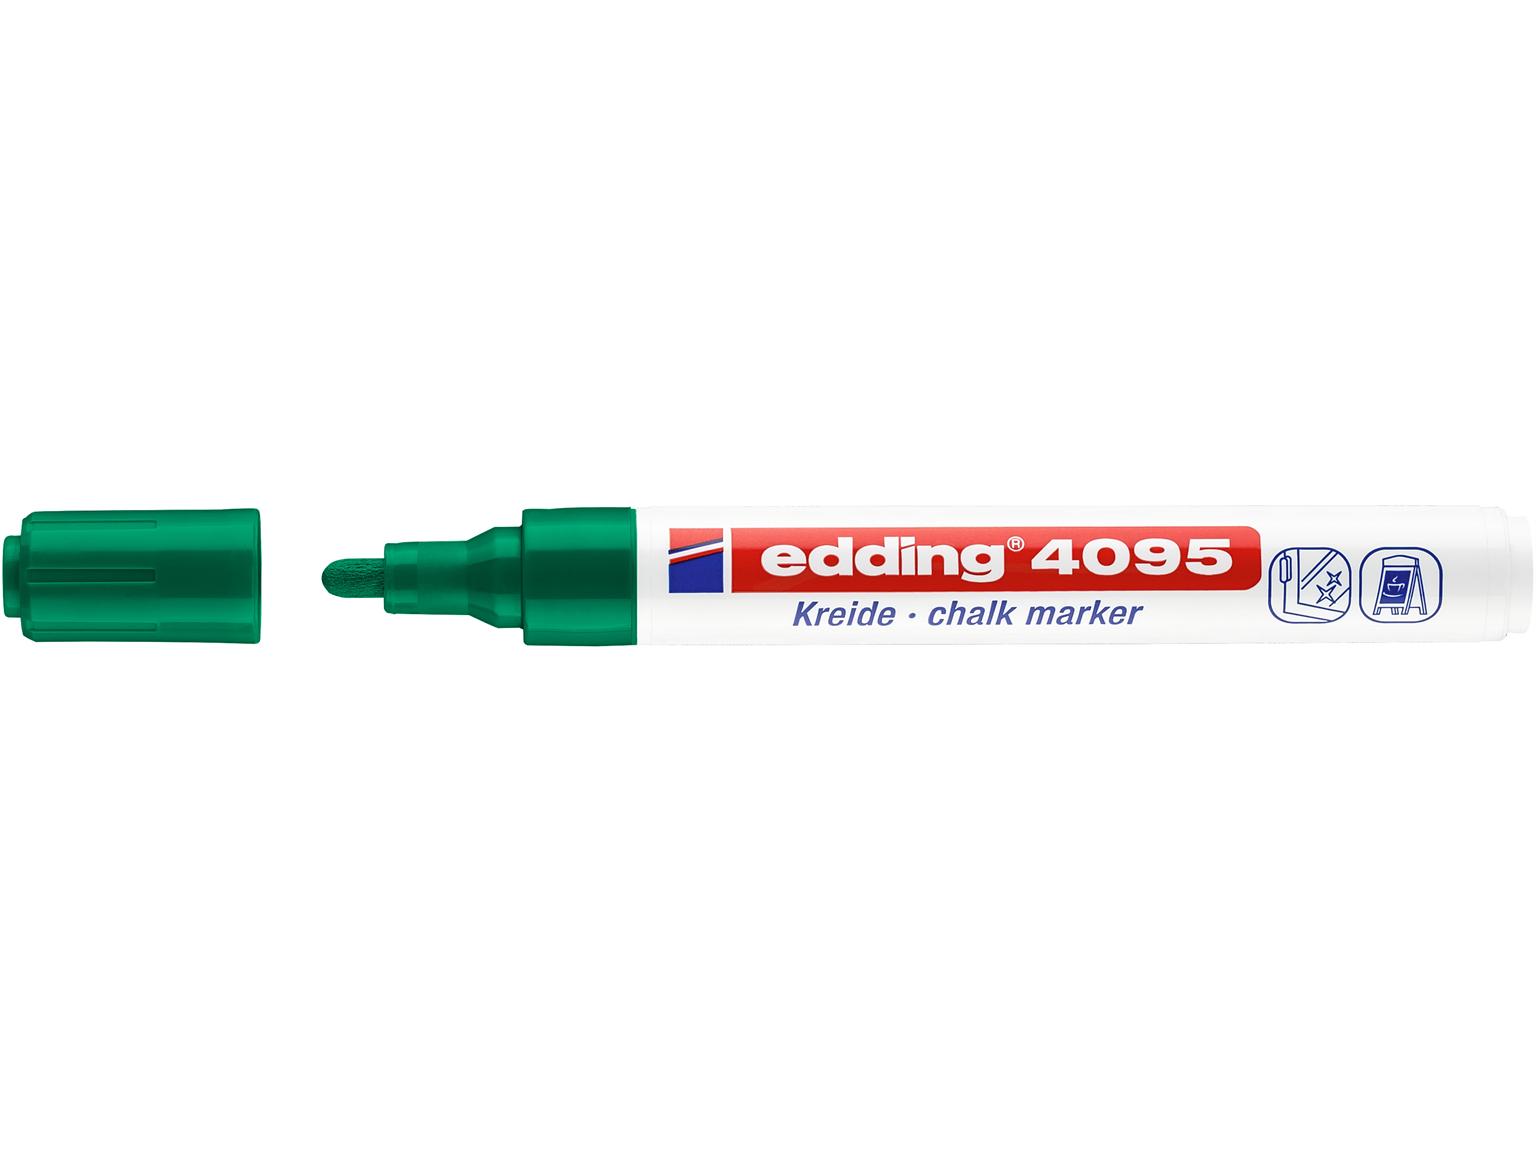 KREIDEMARKER EDDING  edding Kreidemarker 4095 grün